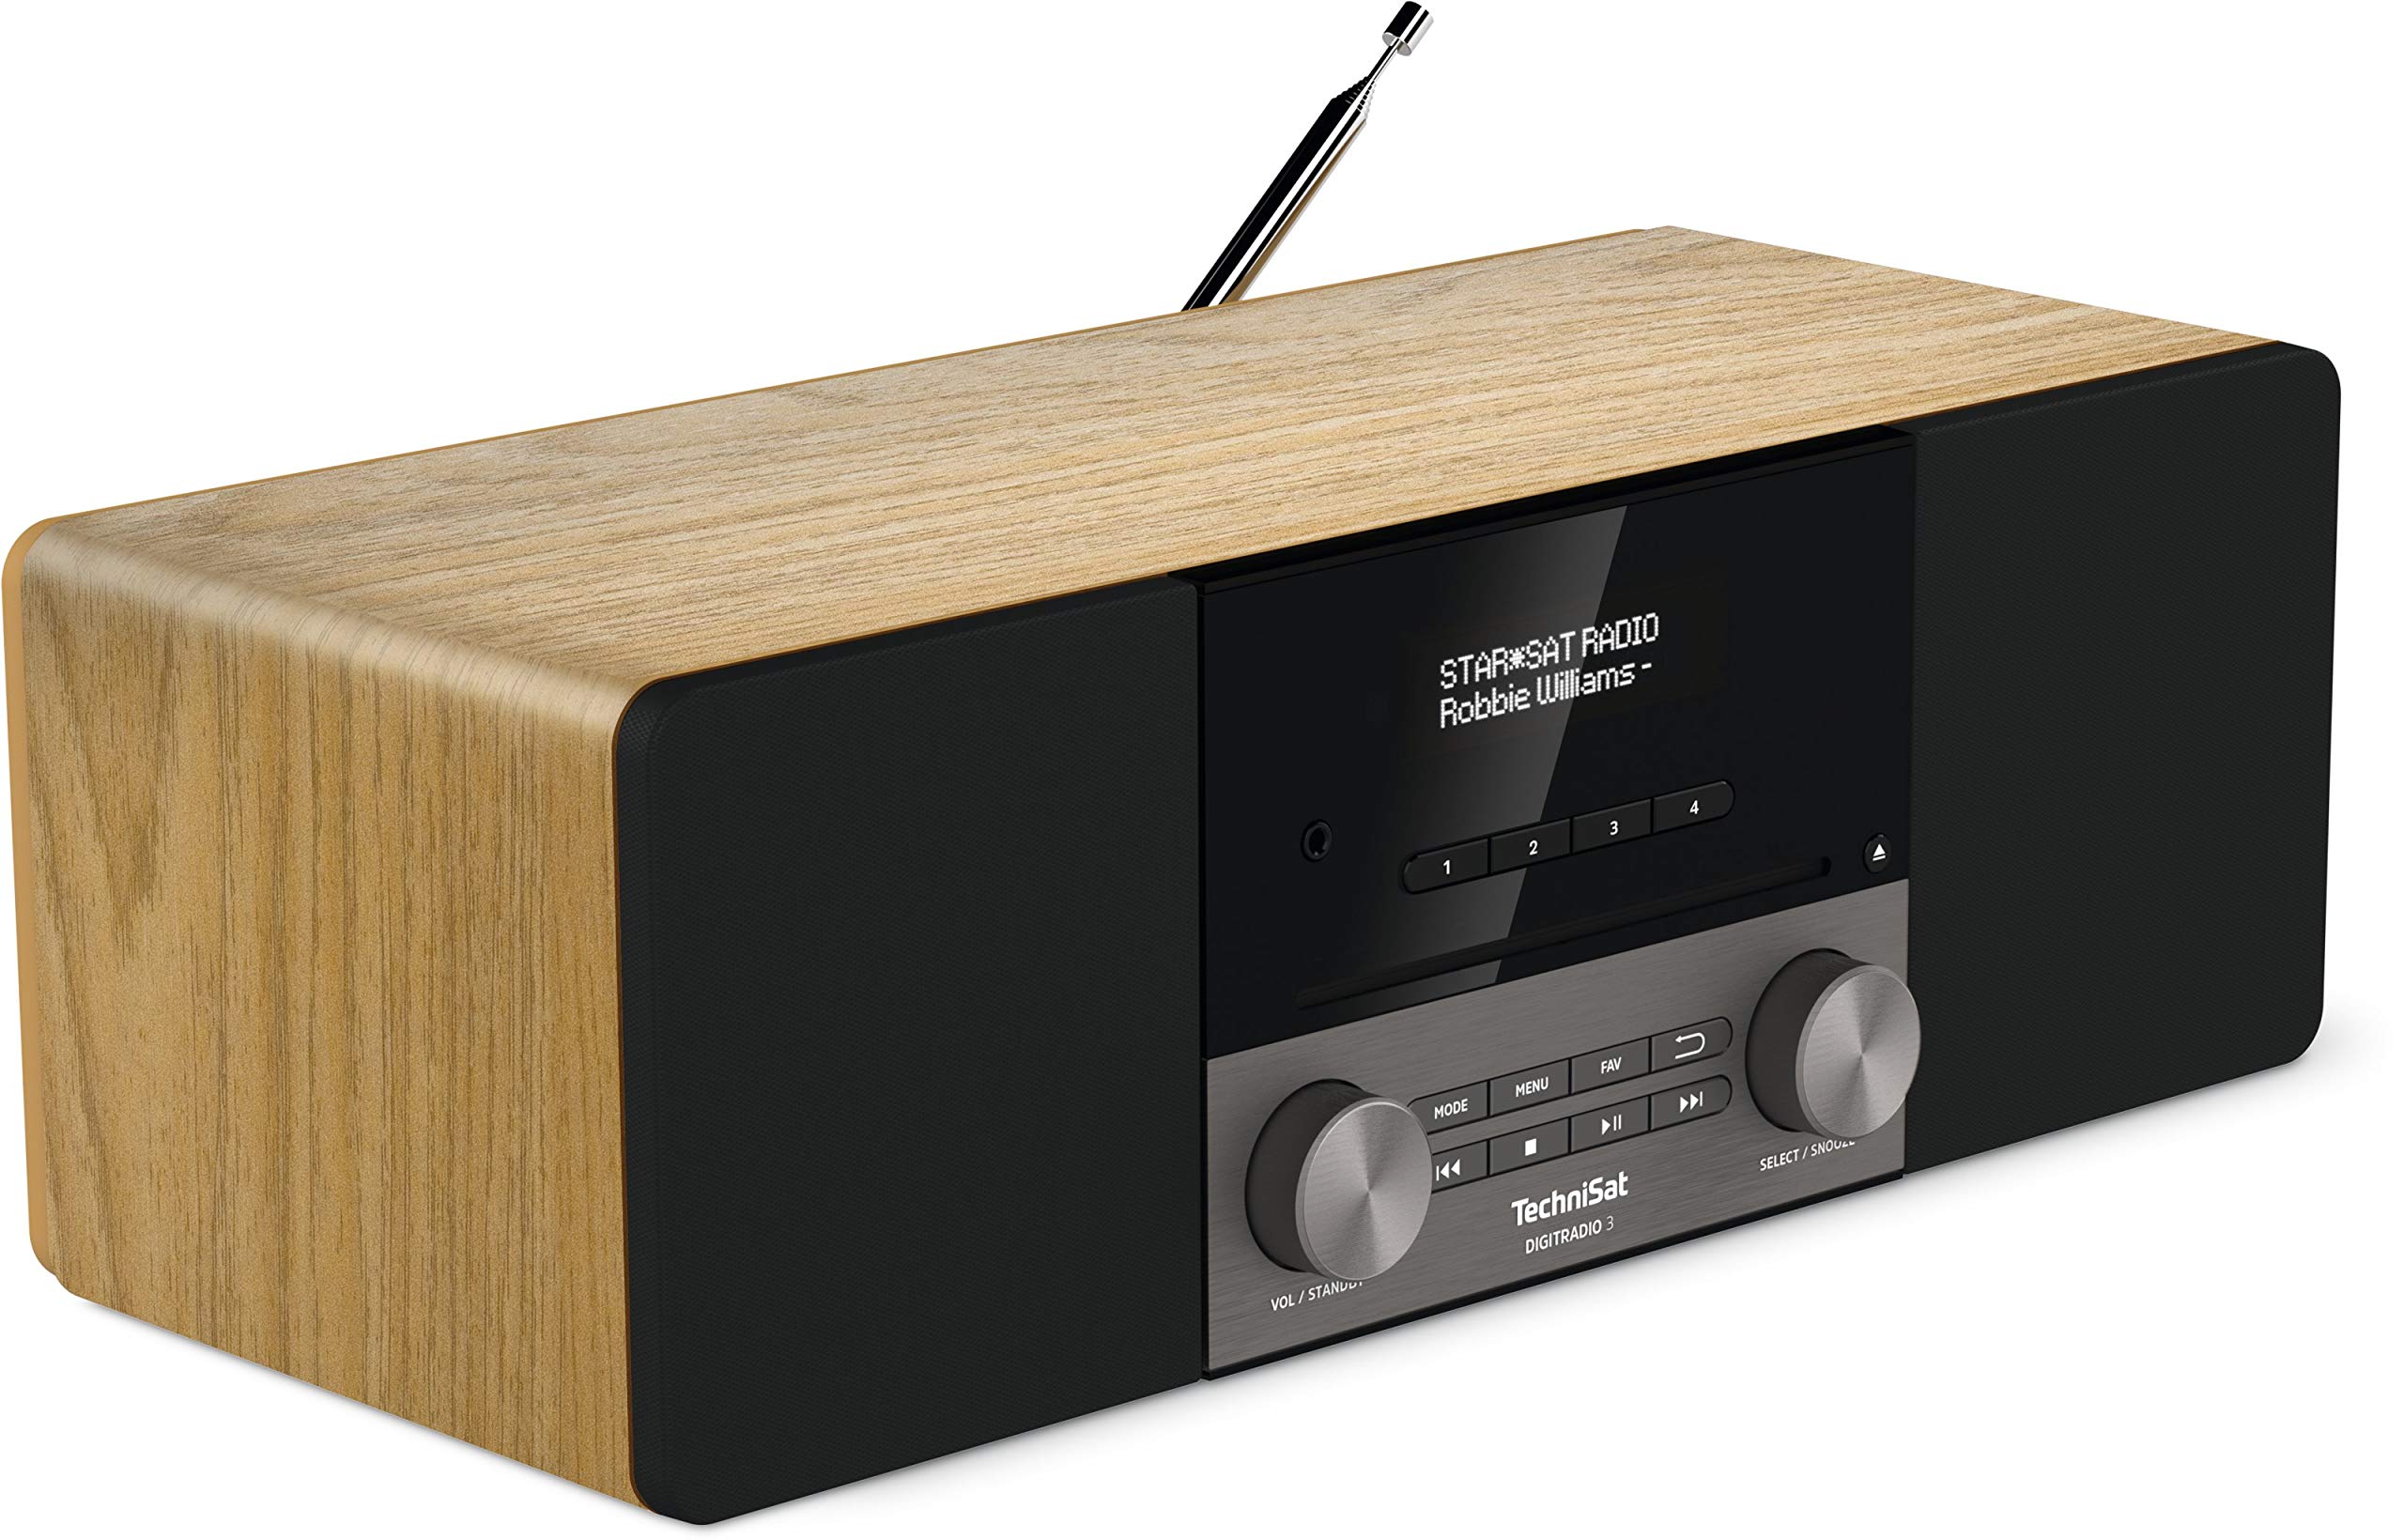 TechniSat DIGITRADIO 3 - Stereo DAB Radio Kompaktanlage (DAB+, UKW, CD-Player, Bluetooth, USB, Kopfhöreranschluss, AUX-Eingang, Radiowecker, OLED Display, 20 Watt RMS) eiche